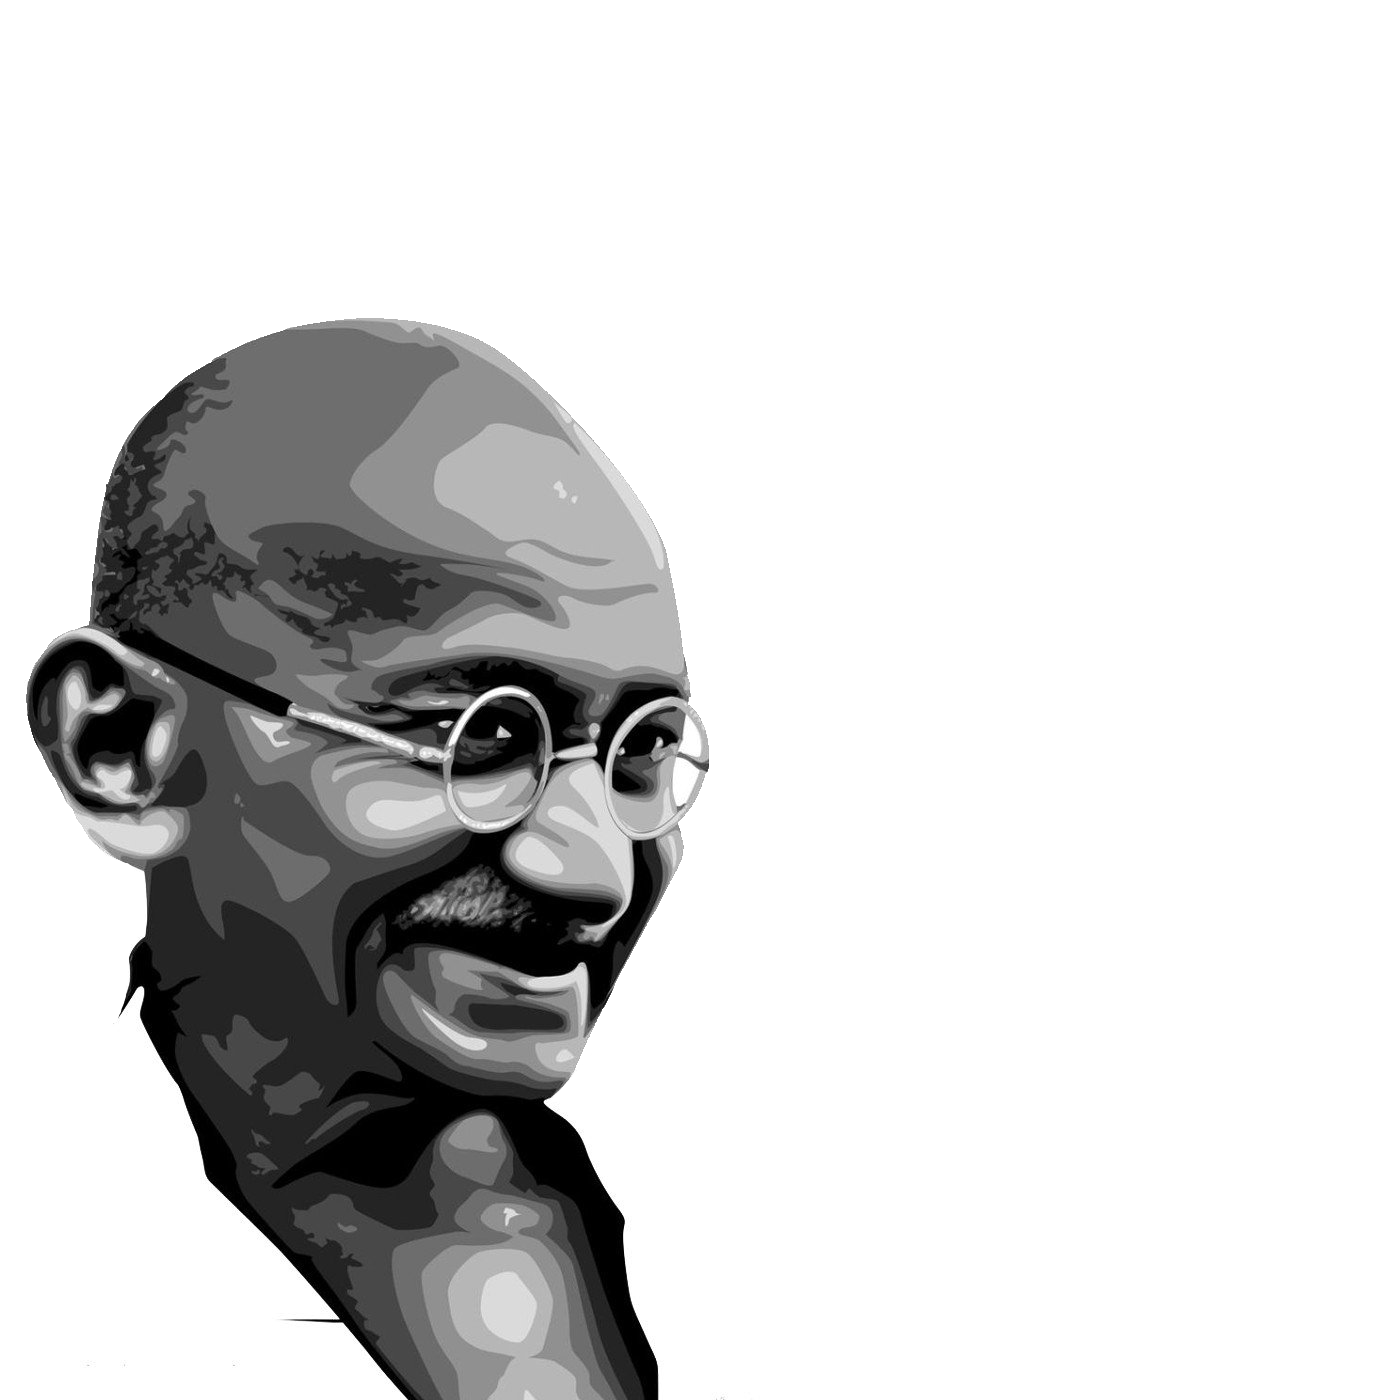 Mahatma Gandhi PNG Image in Transparent pngteam.com